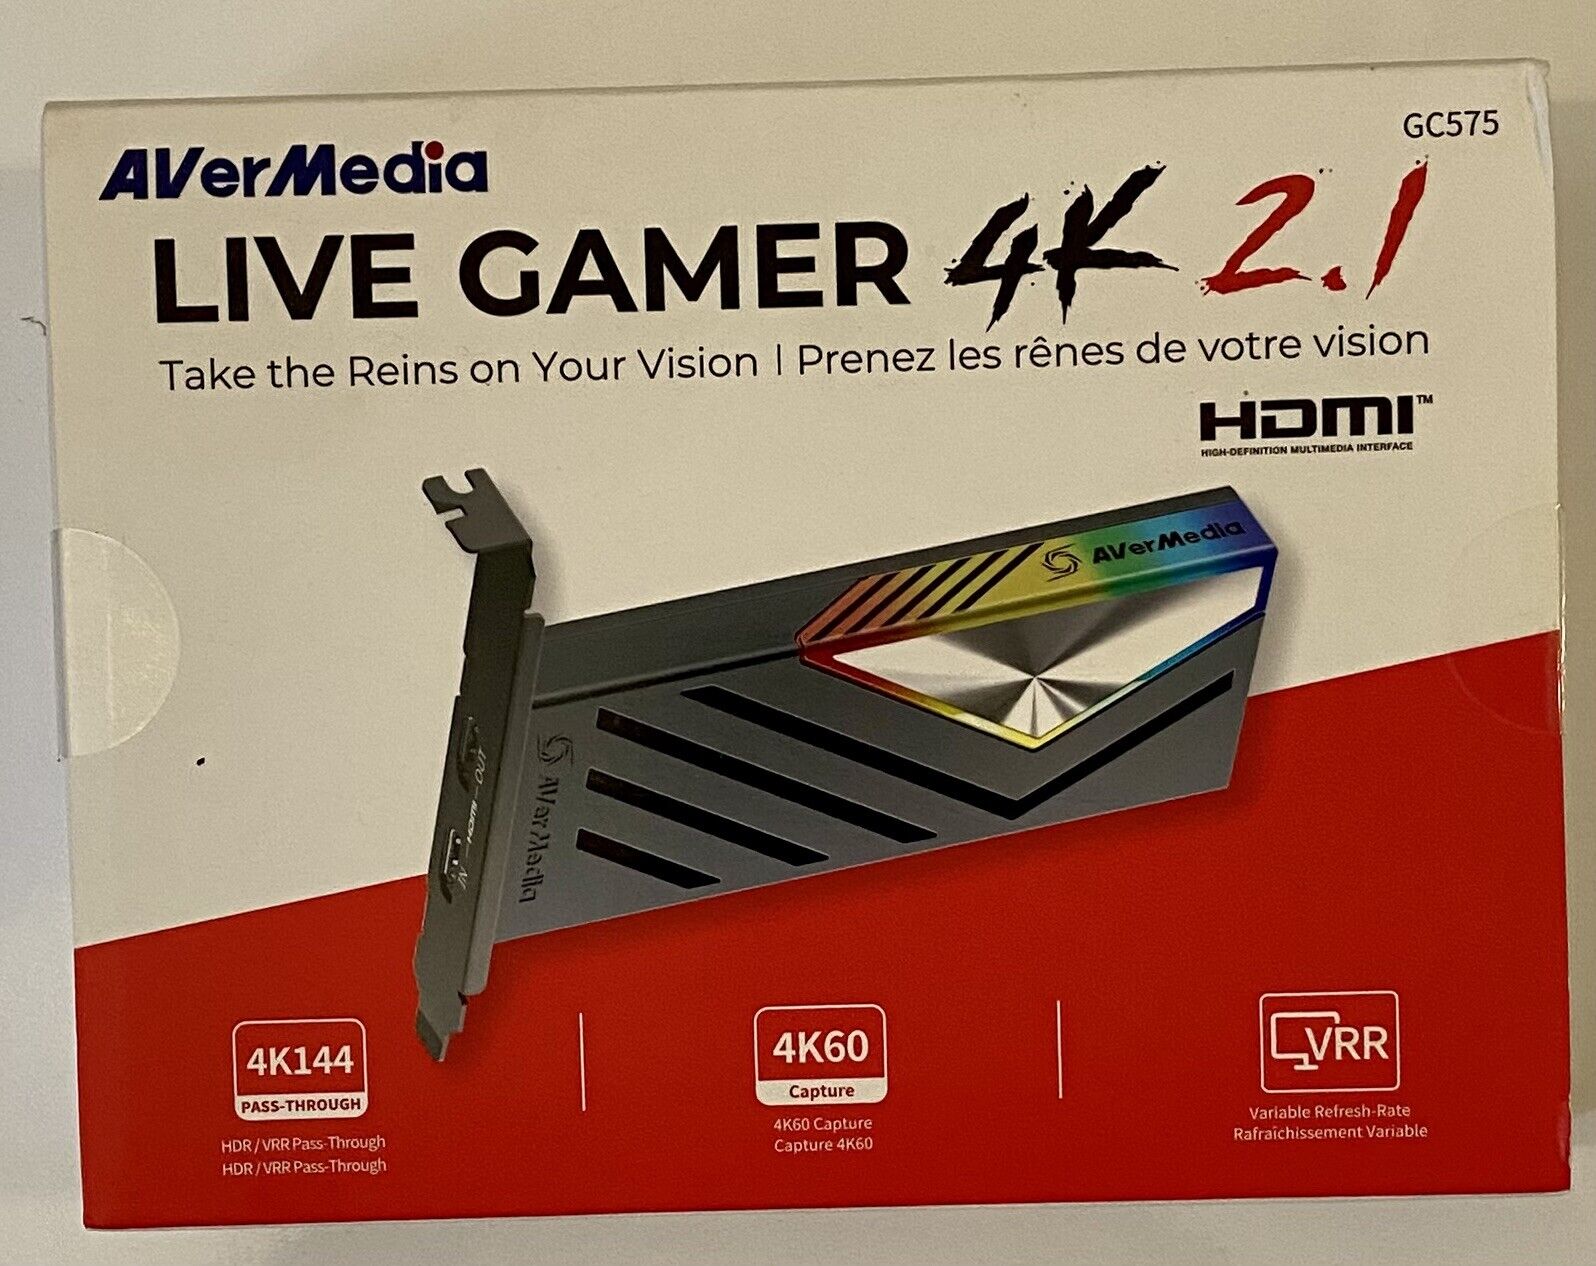 AVerMedia Live Gamer 4K 2.1 - PCIe - HDMI Game Capture Card - GC575 - NEW in BOX